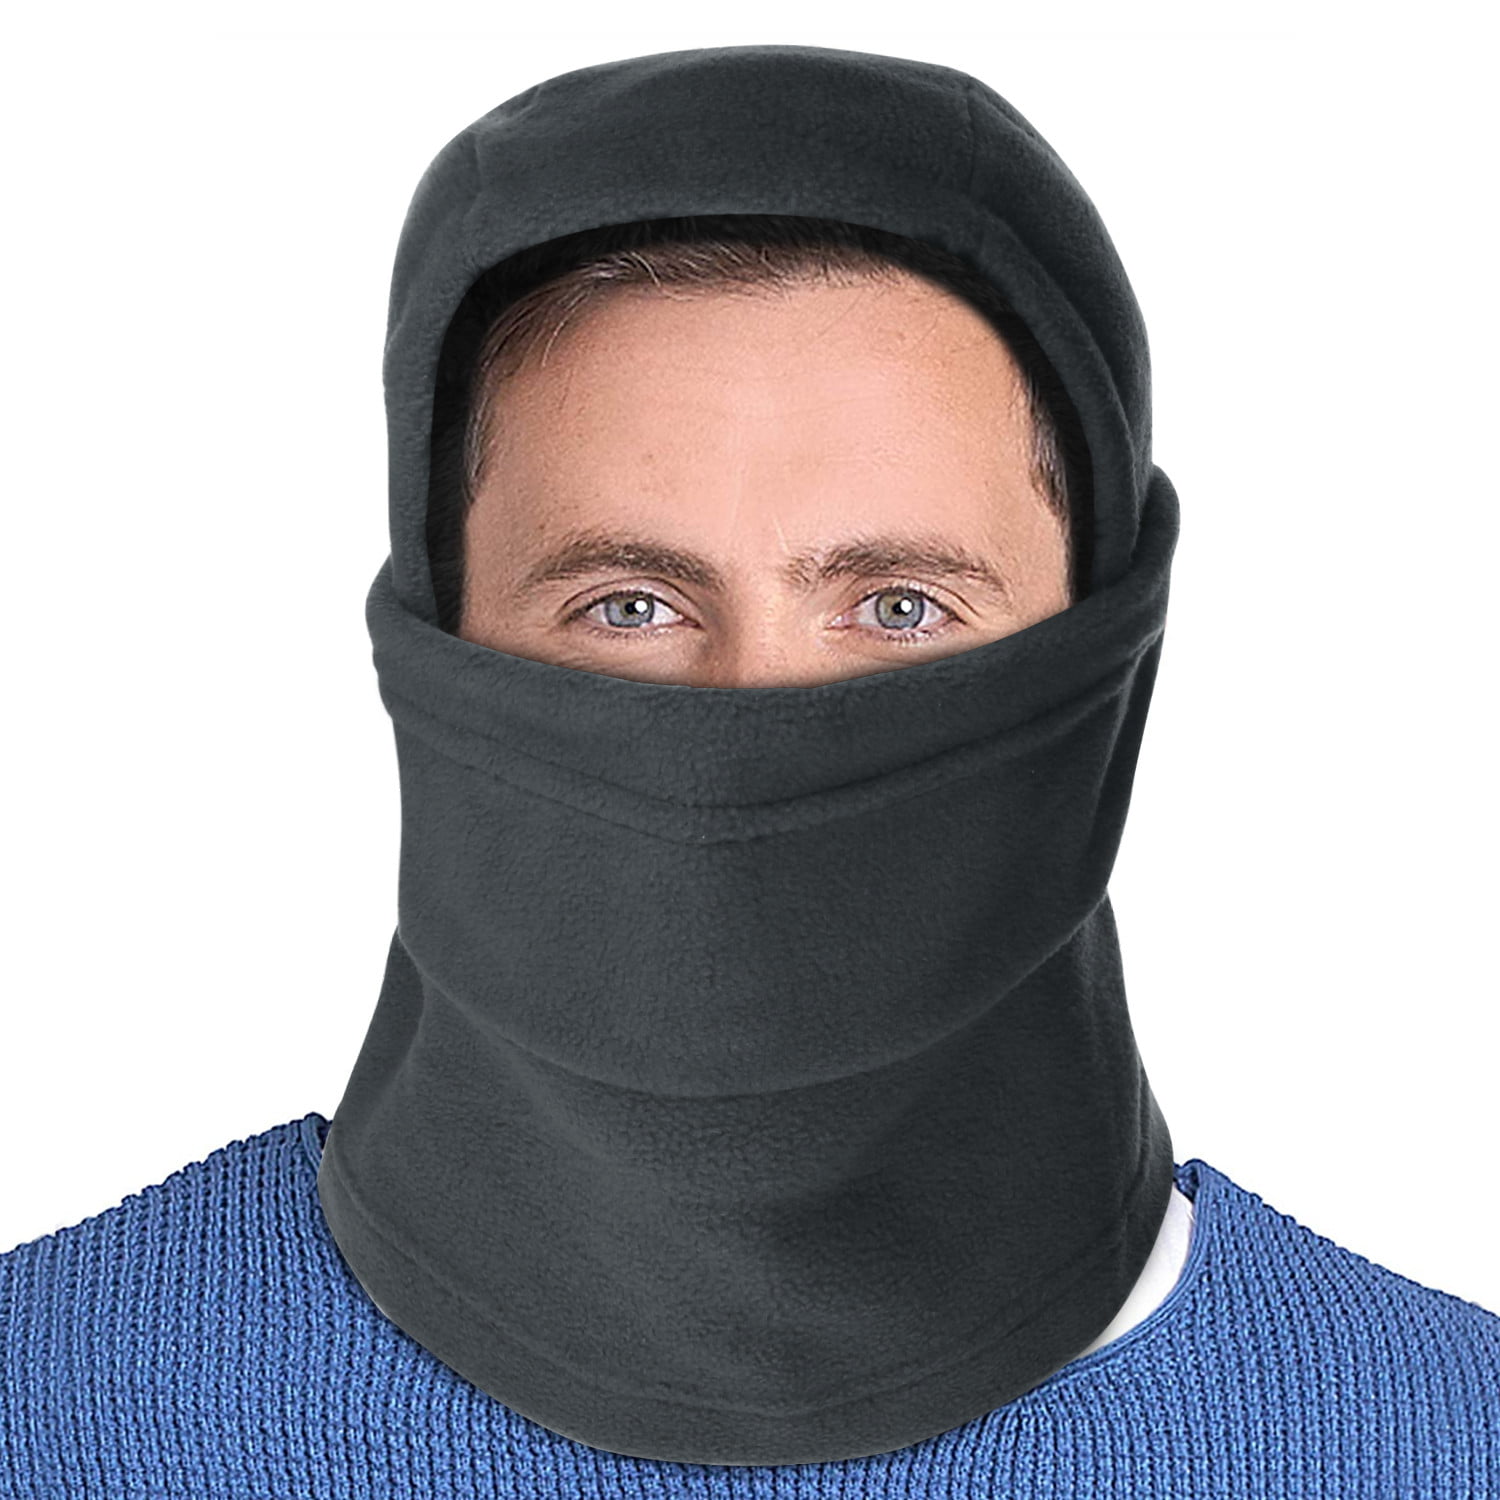 Bike Mask Balaclava Cycling Ski Face Cover Windproof Thermal Head Warmer Hood 